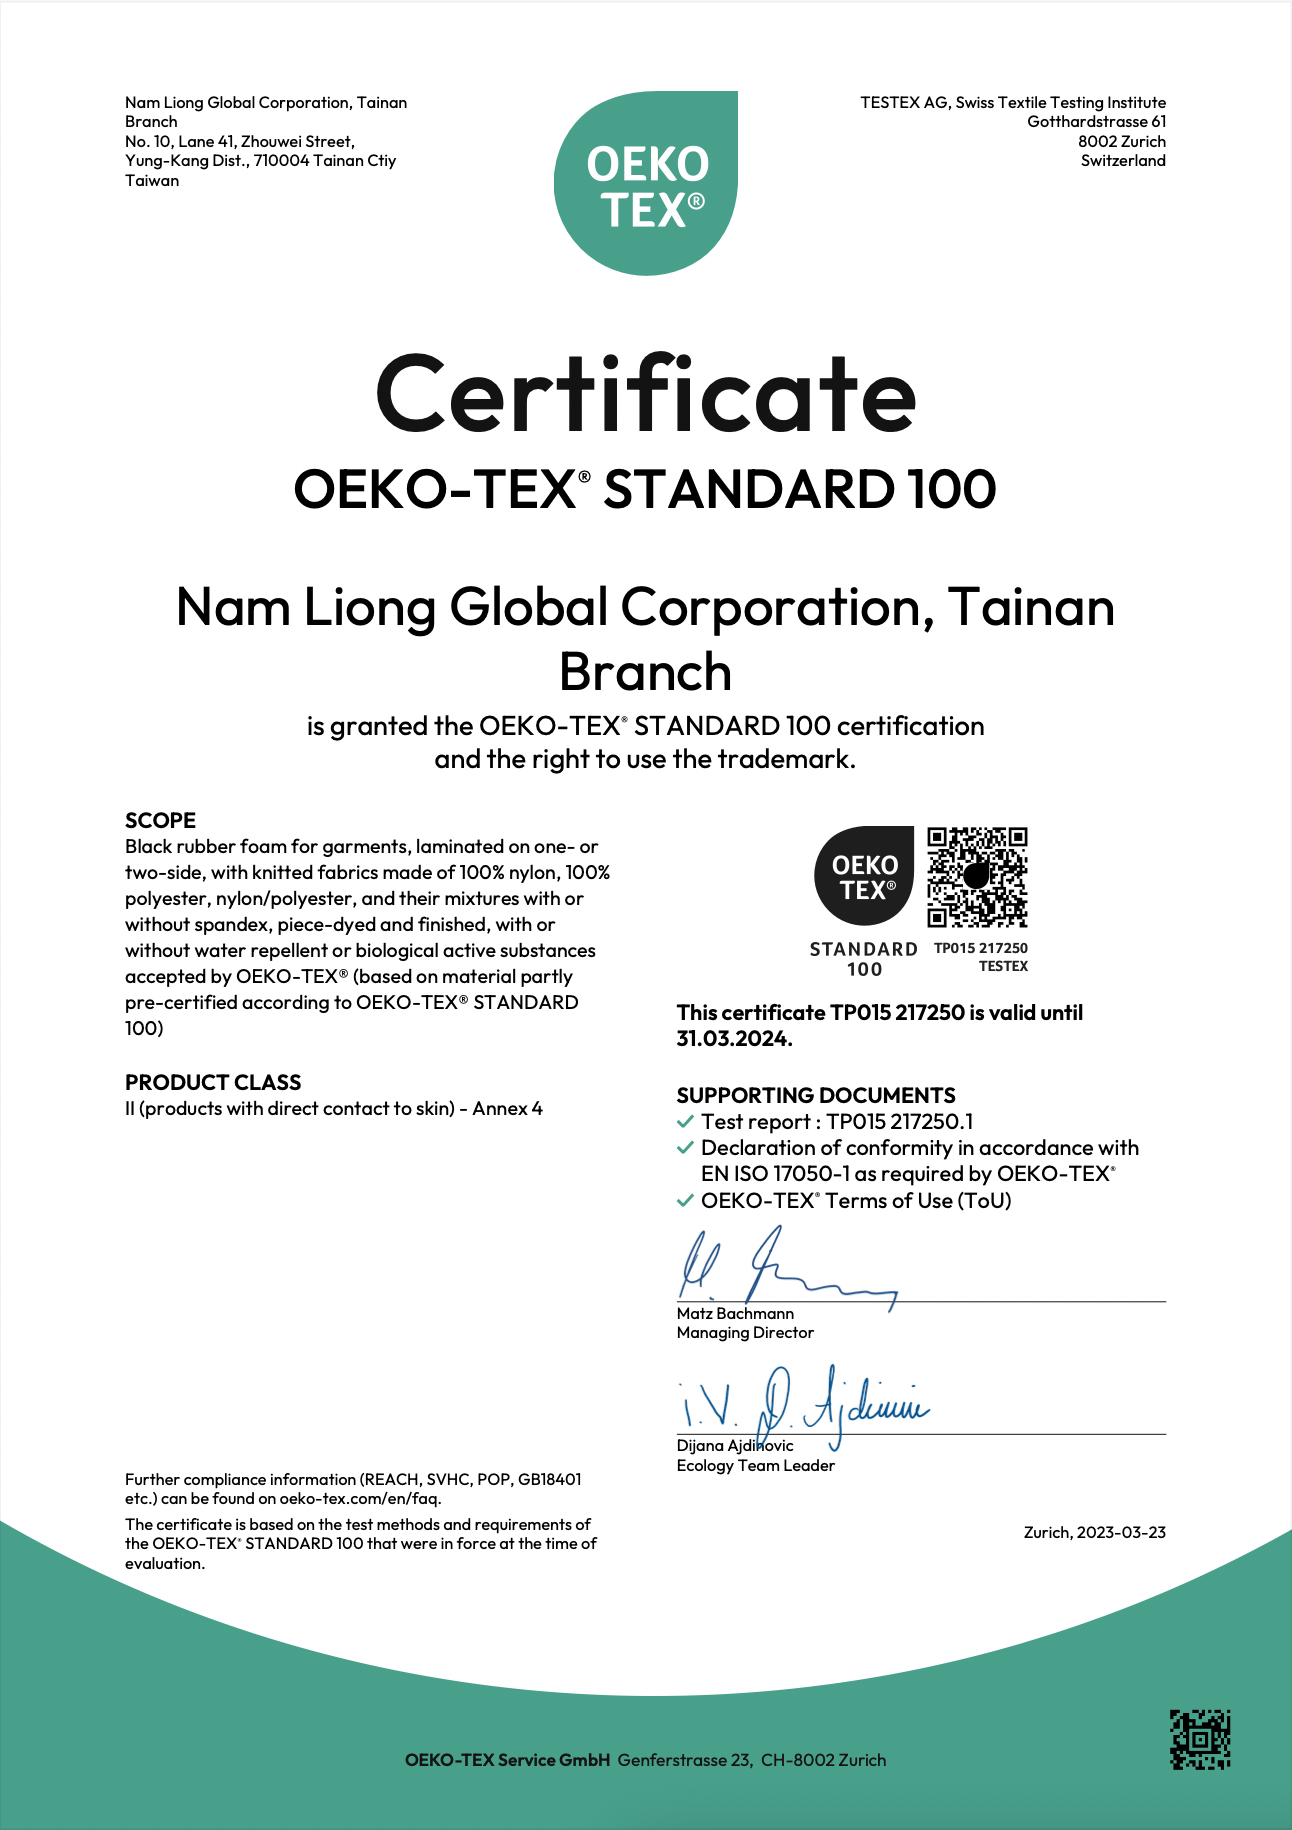 Certificación Oeko-Tex Standard 100® aprobada.